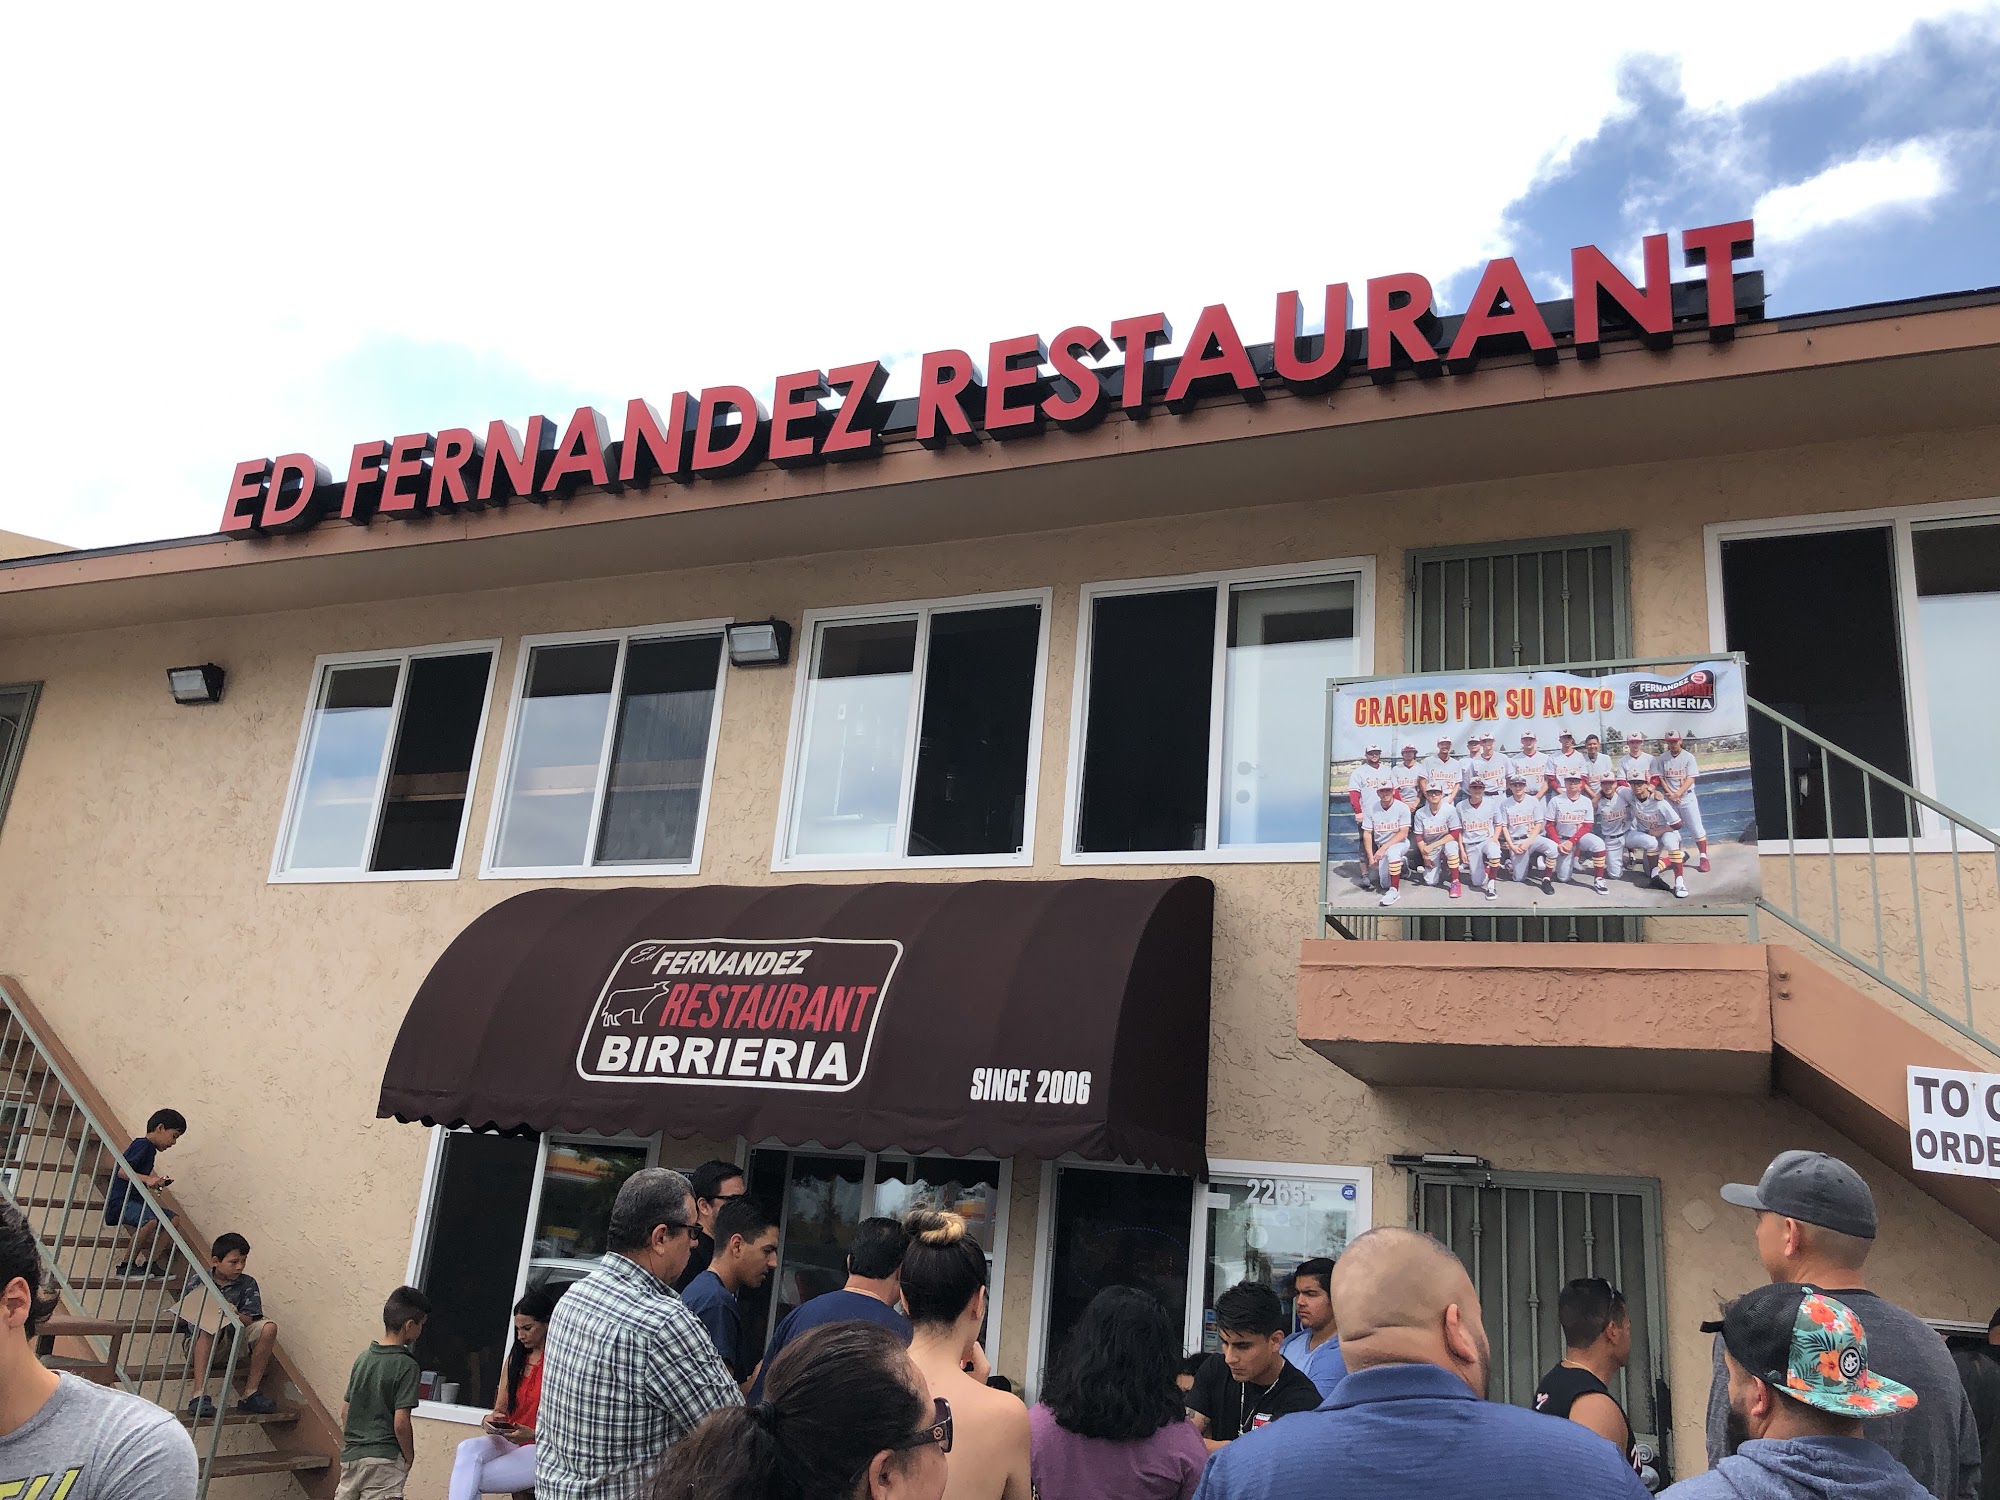 Ed Fernandez Restaurant Birrieria